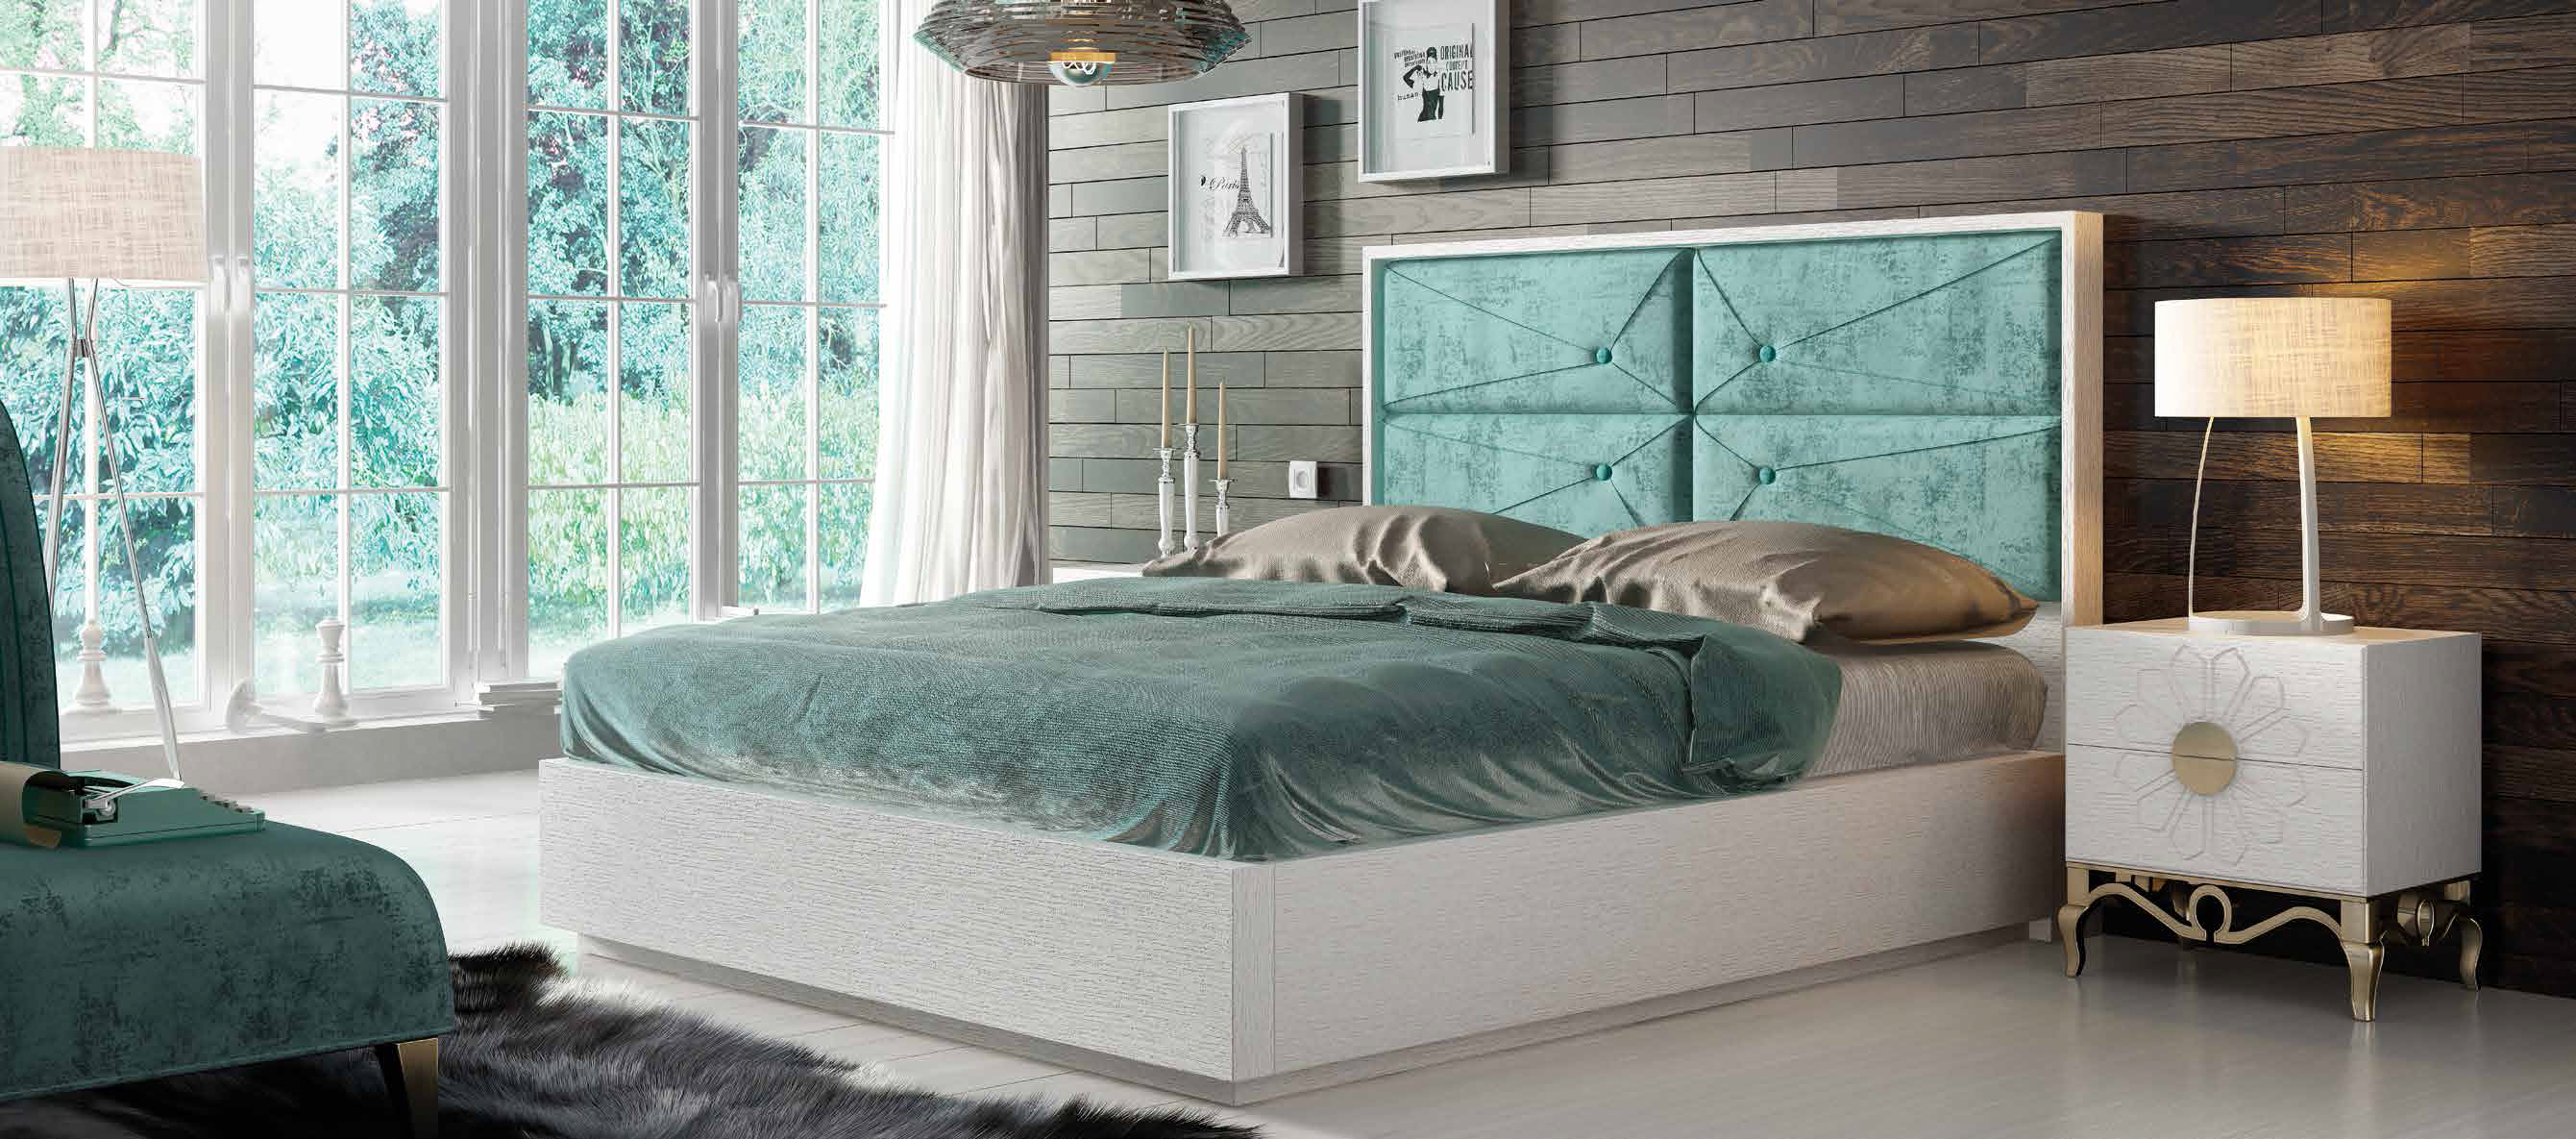 Brands Franco Furniture Bedrooms vol2, Spain DOR 63